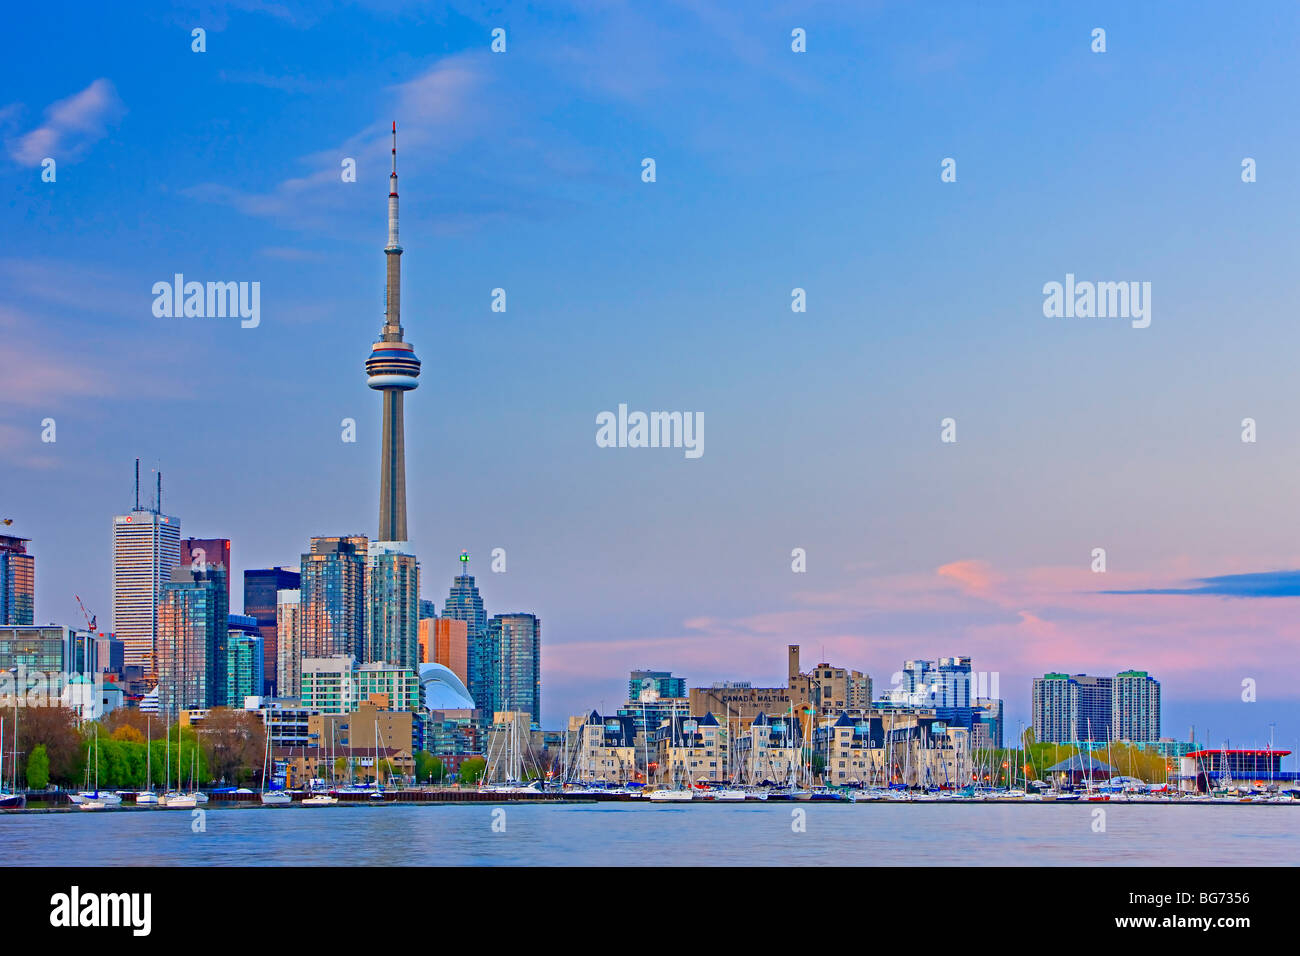 Skyline von Toronto City von Ontario Place, Toronto, Ontario, Kanada bei Sonnenuntergang gesehen. Stockfoto